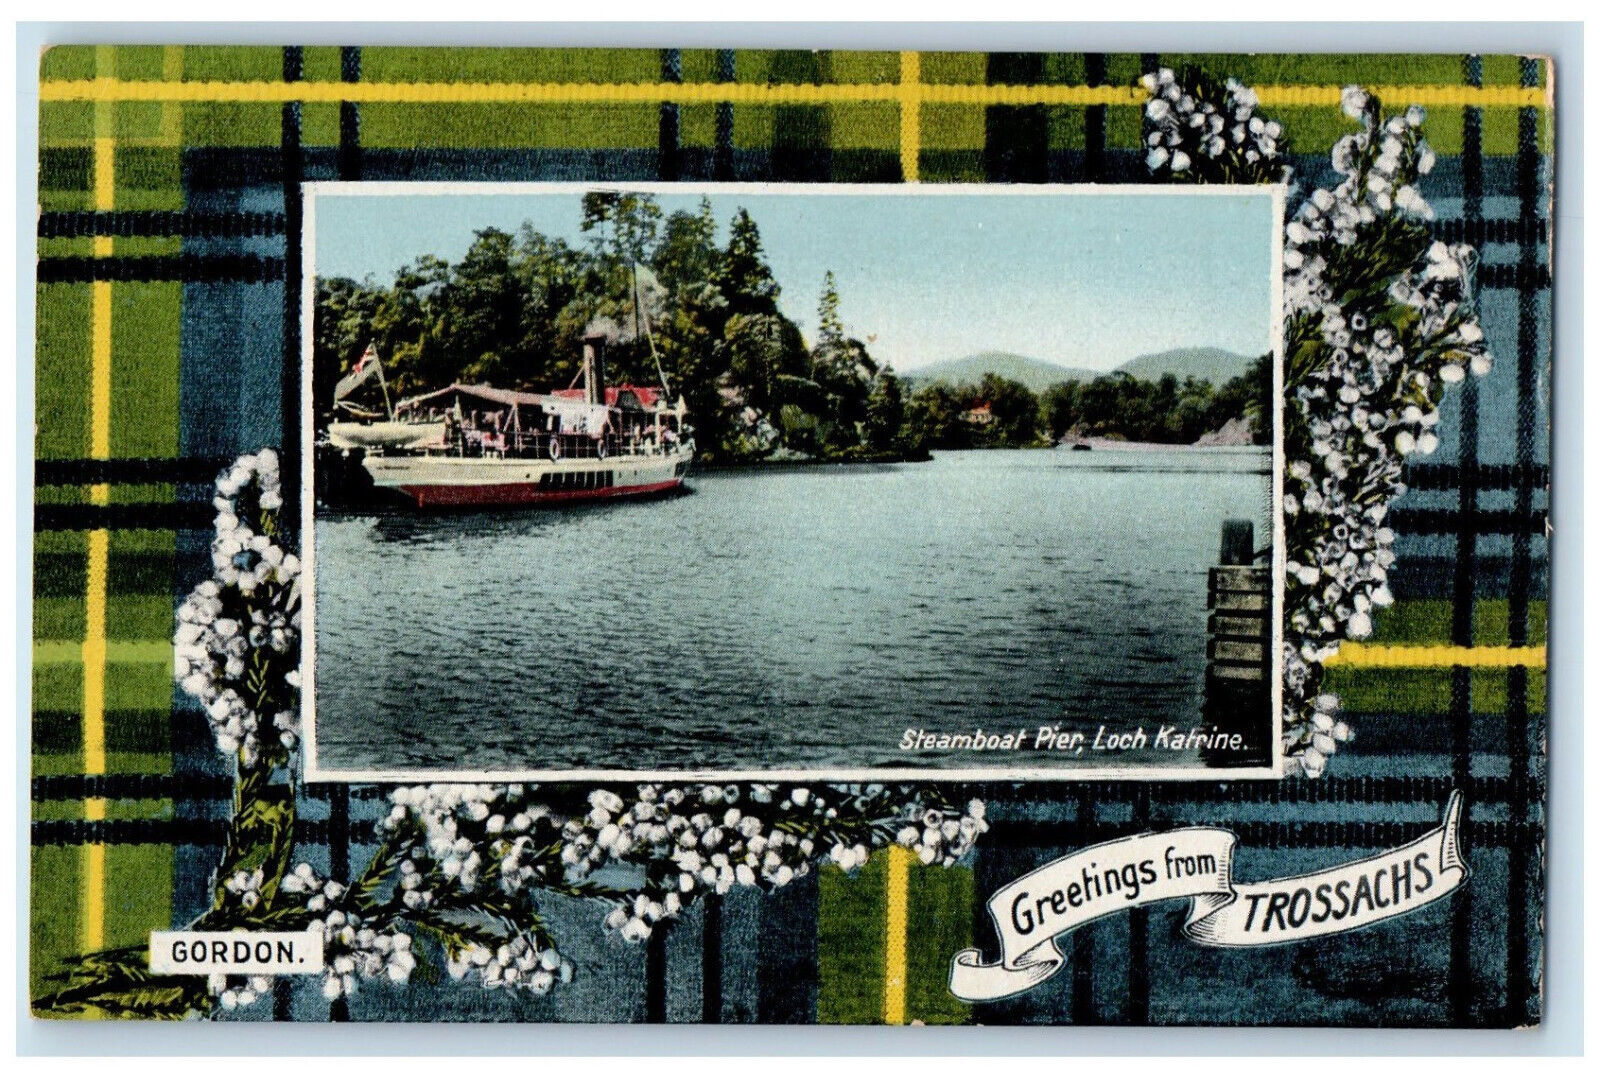 Greetings From Trossachs Scotland UK, Steamboat Pier Loch Katrine Postcard